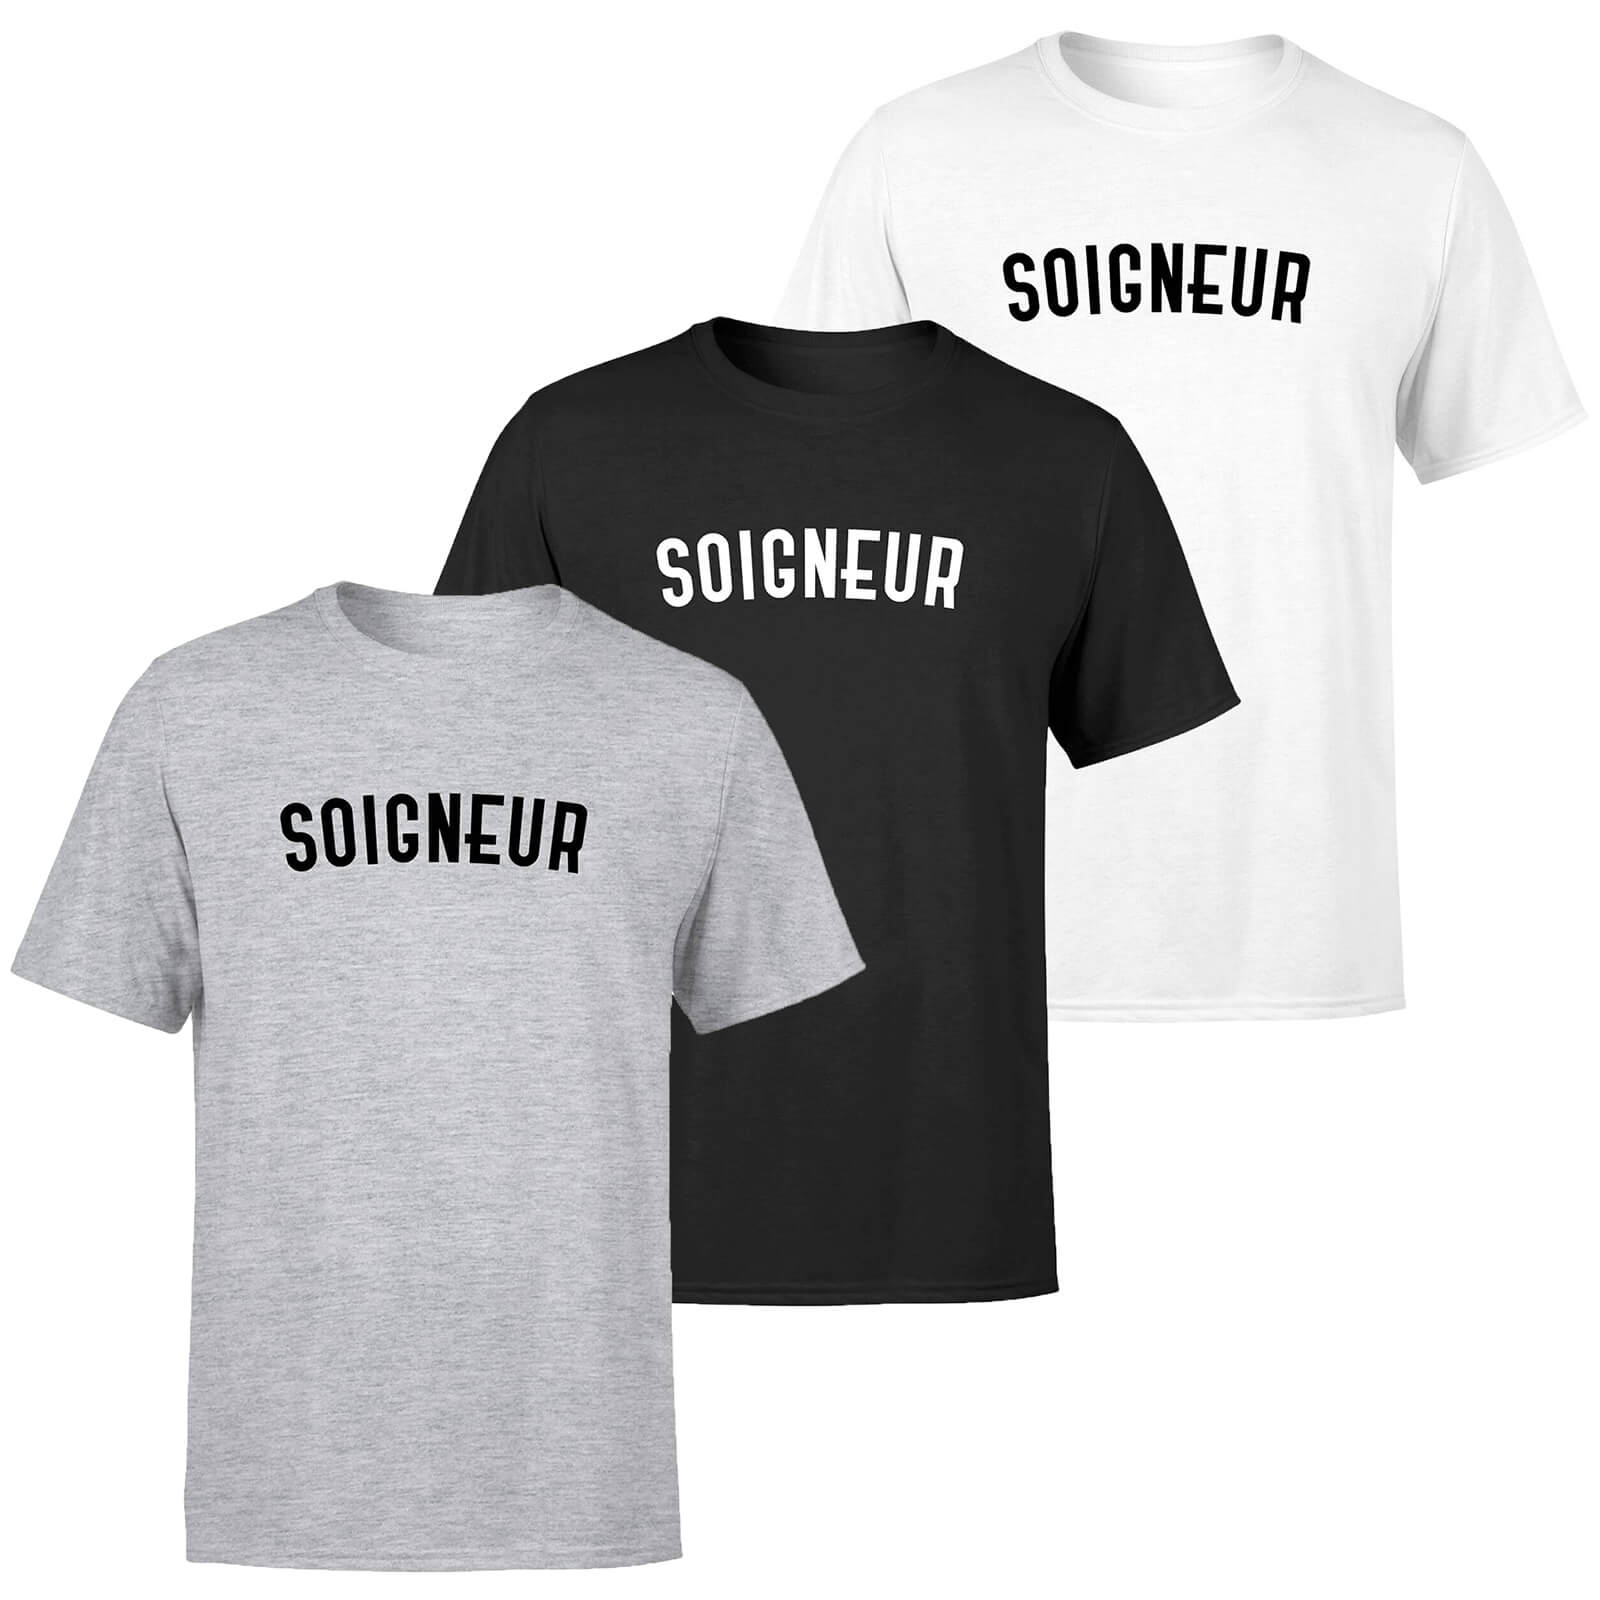 Soigneur Men's T-Shirt - S - Weiß